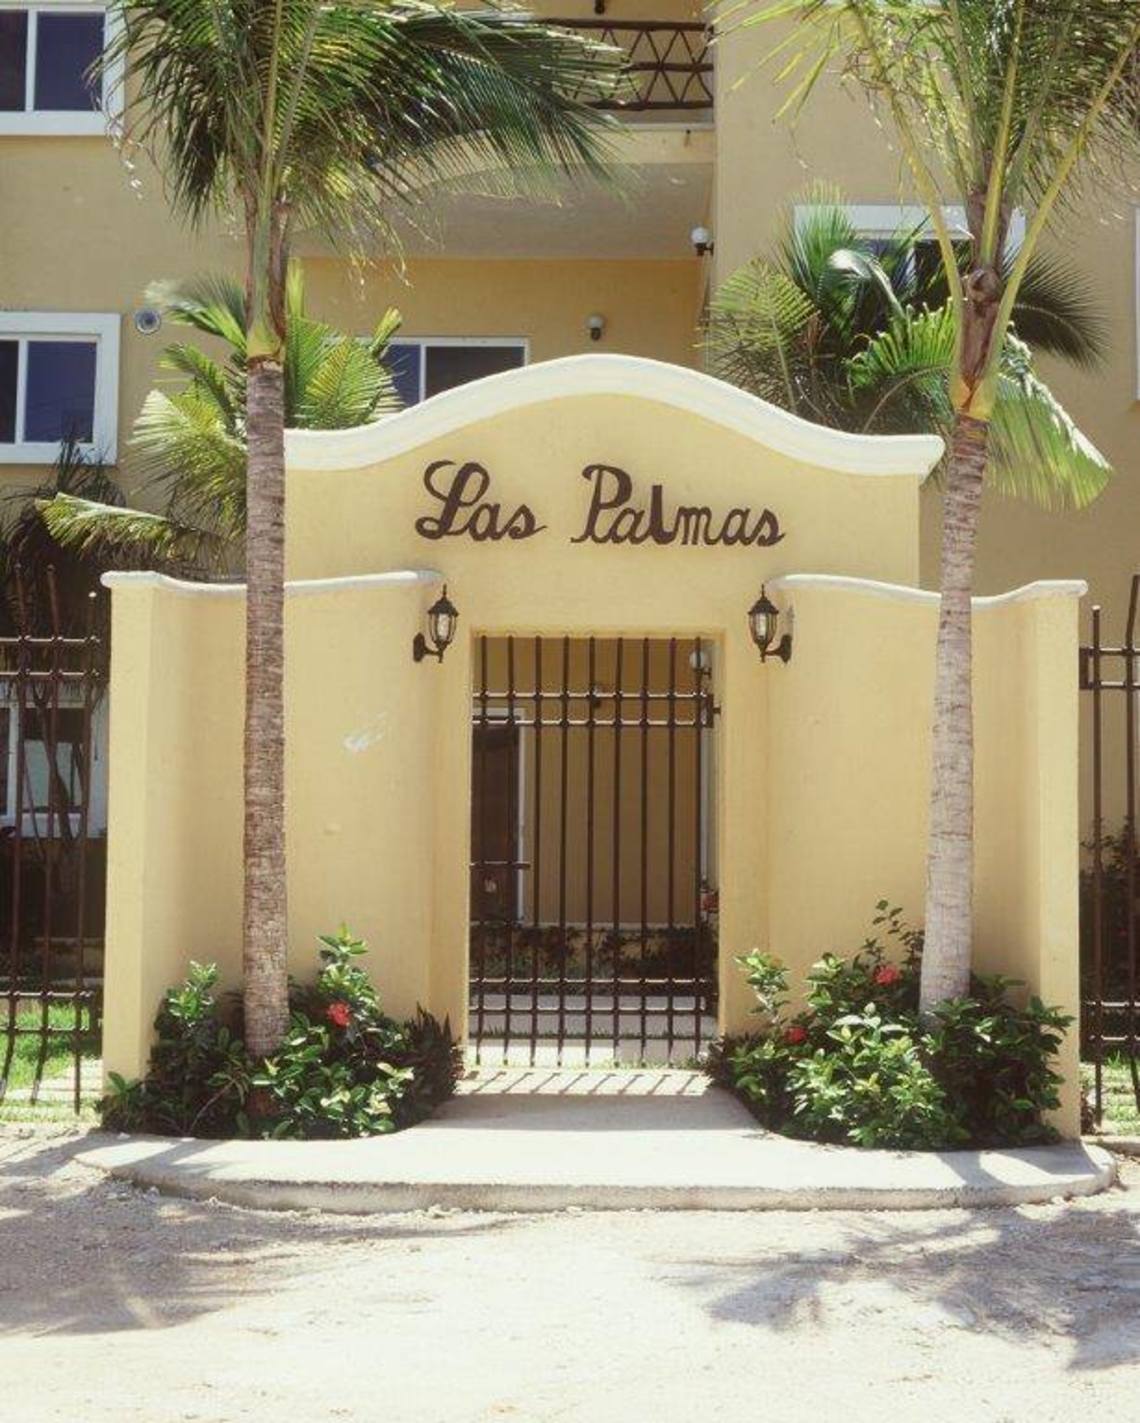 Condominio Las Palmas